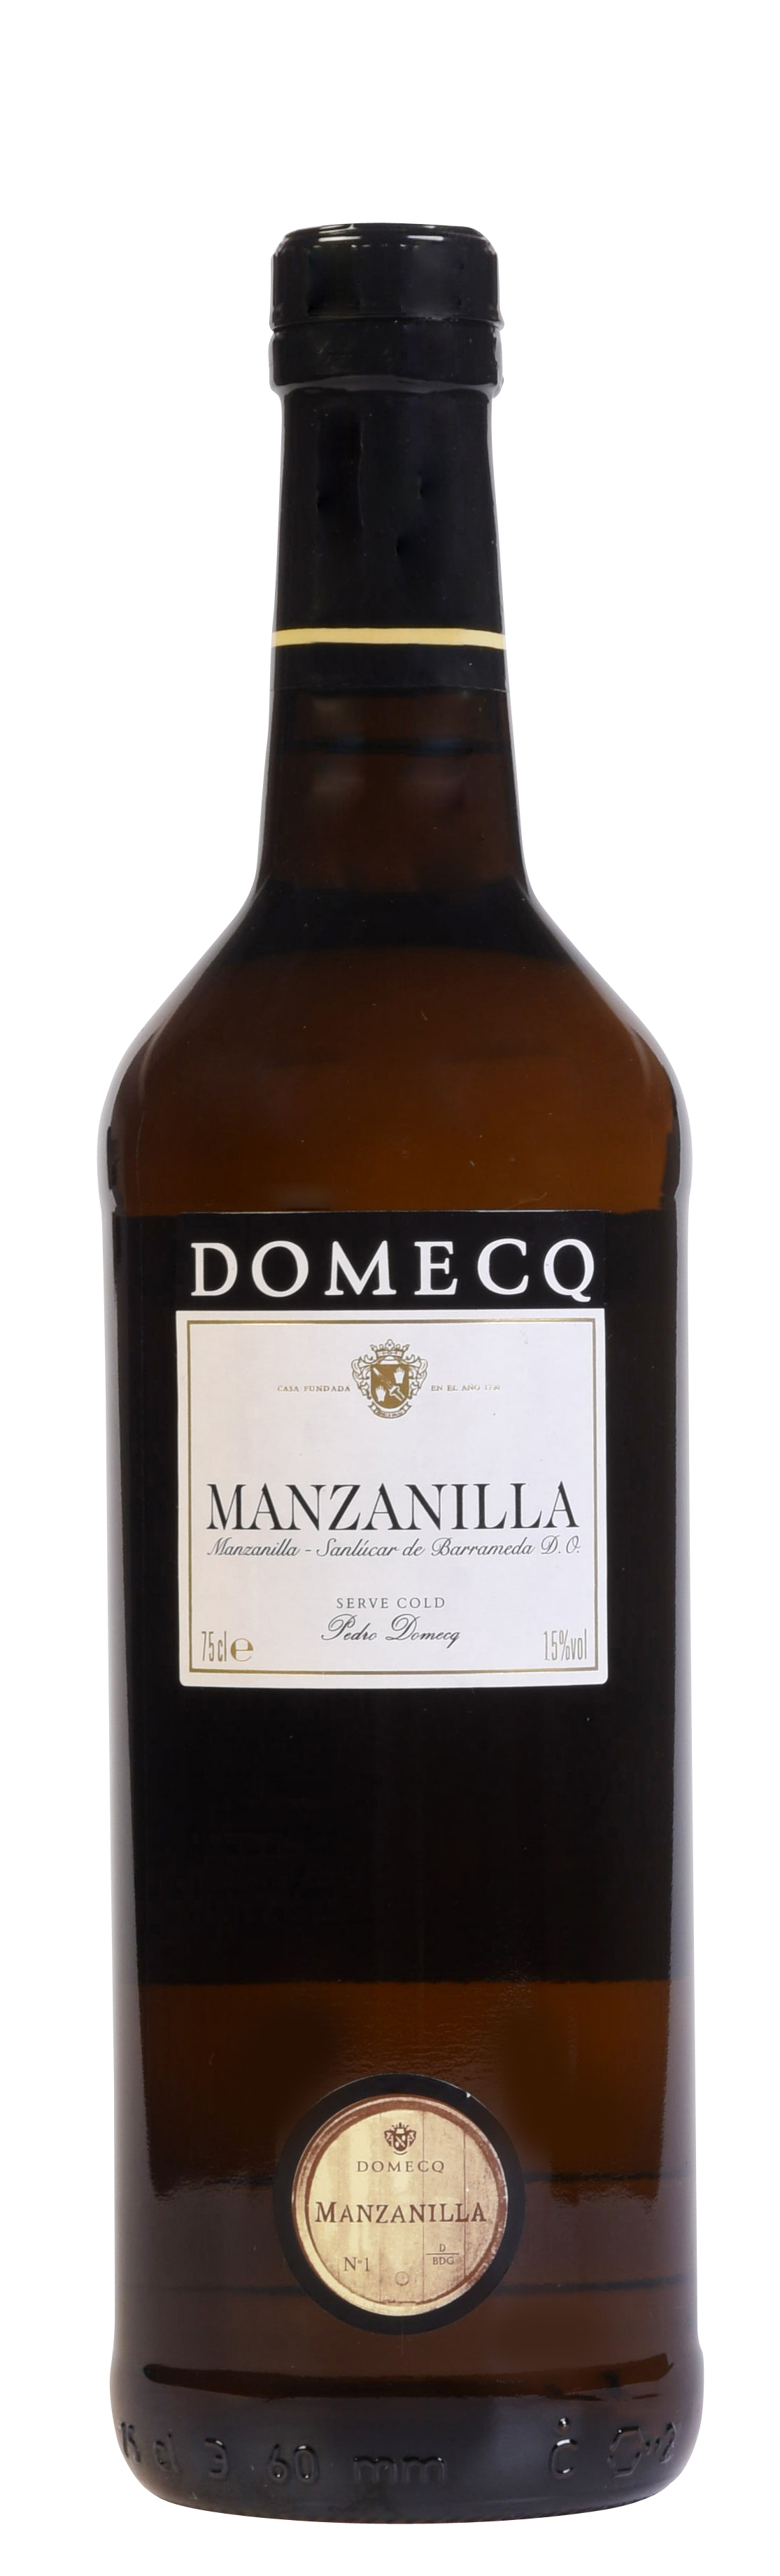 70196 Domecq manzanilla sherry 0,75 ltr